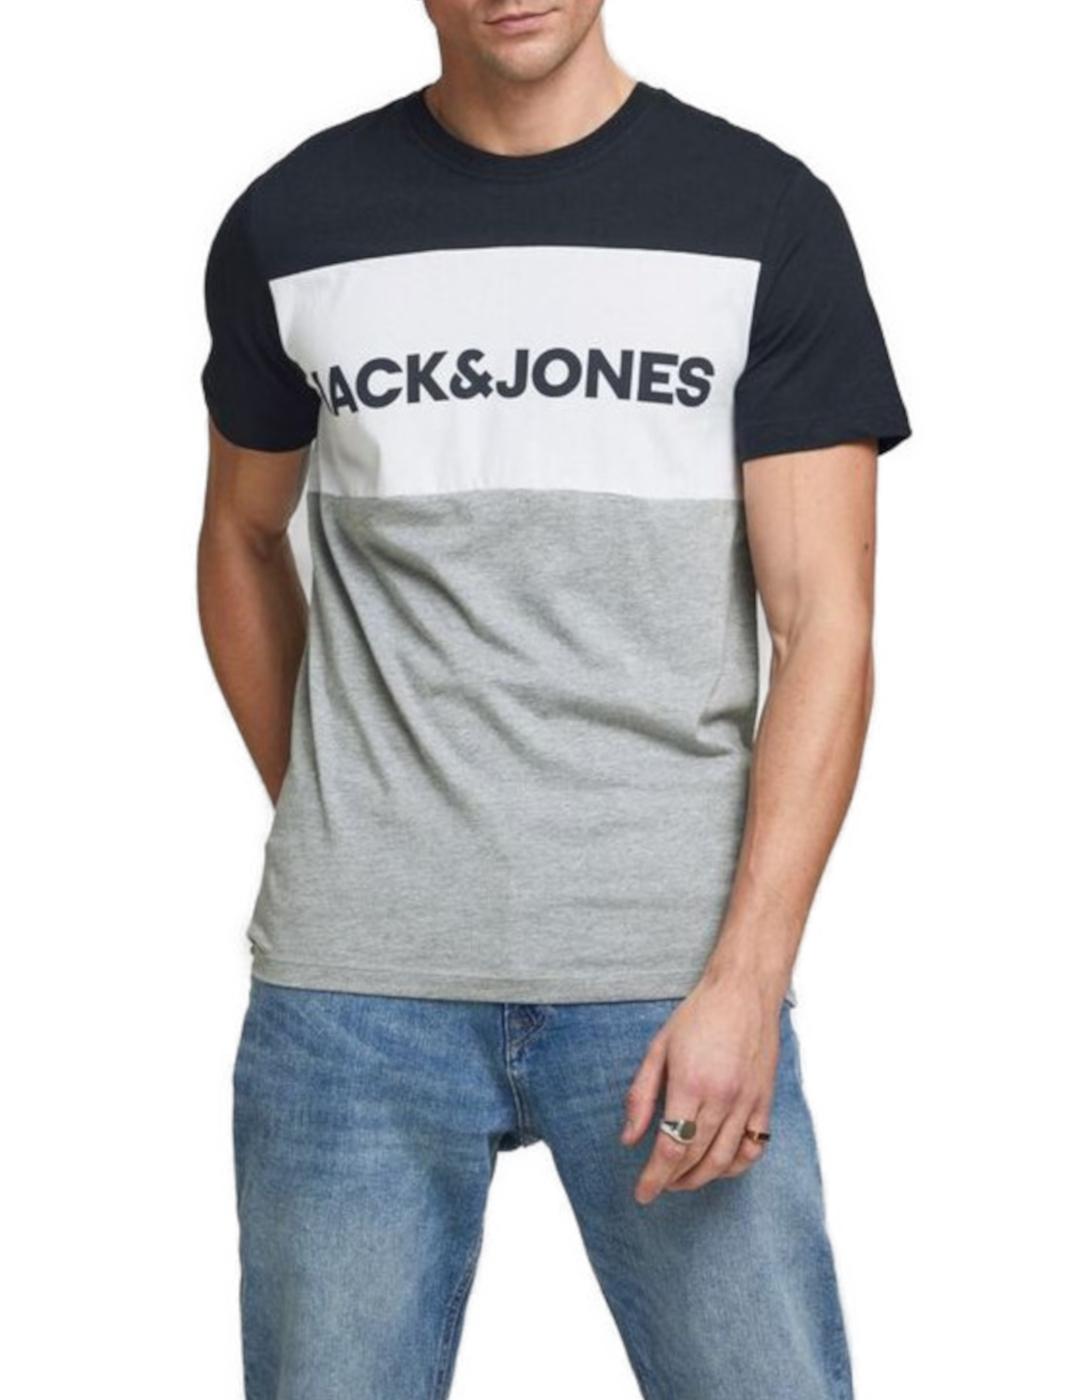 Camiseta Jack&Jones marino hombre -a